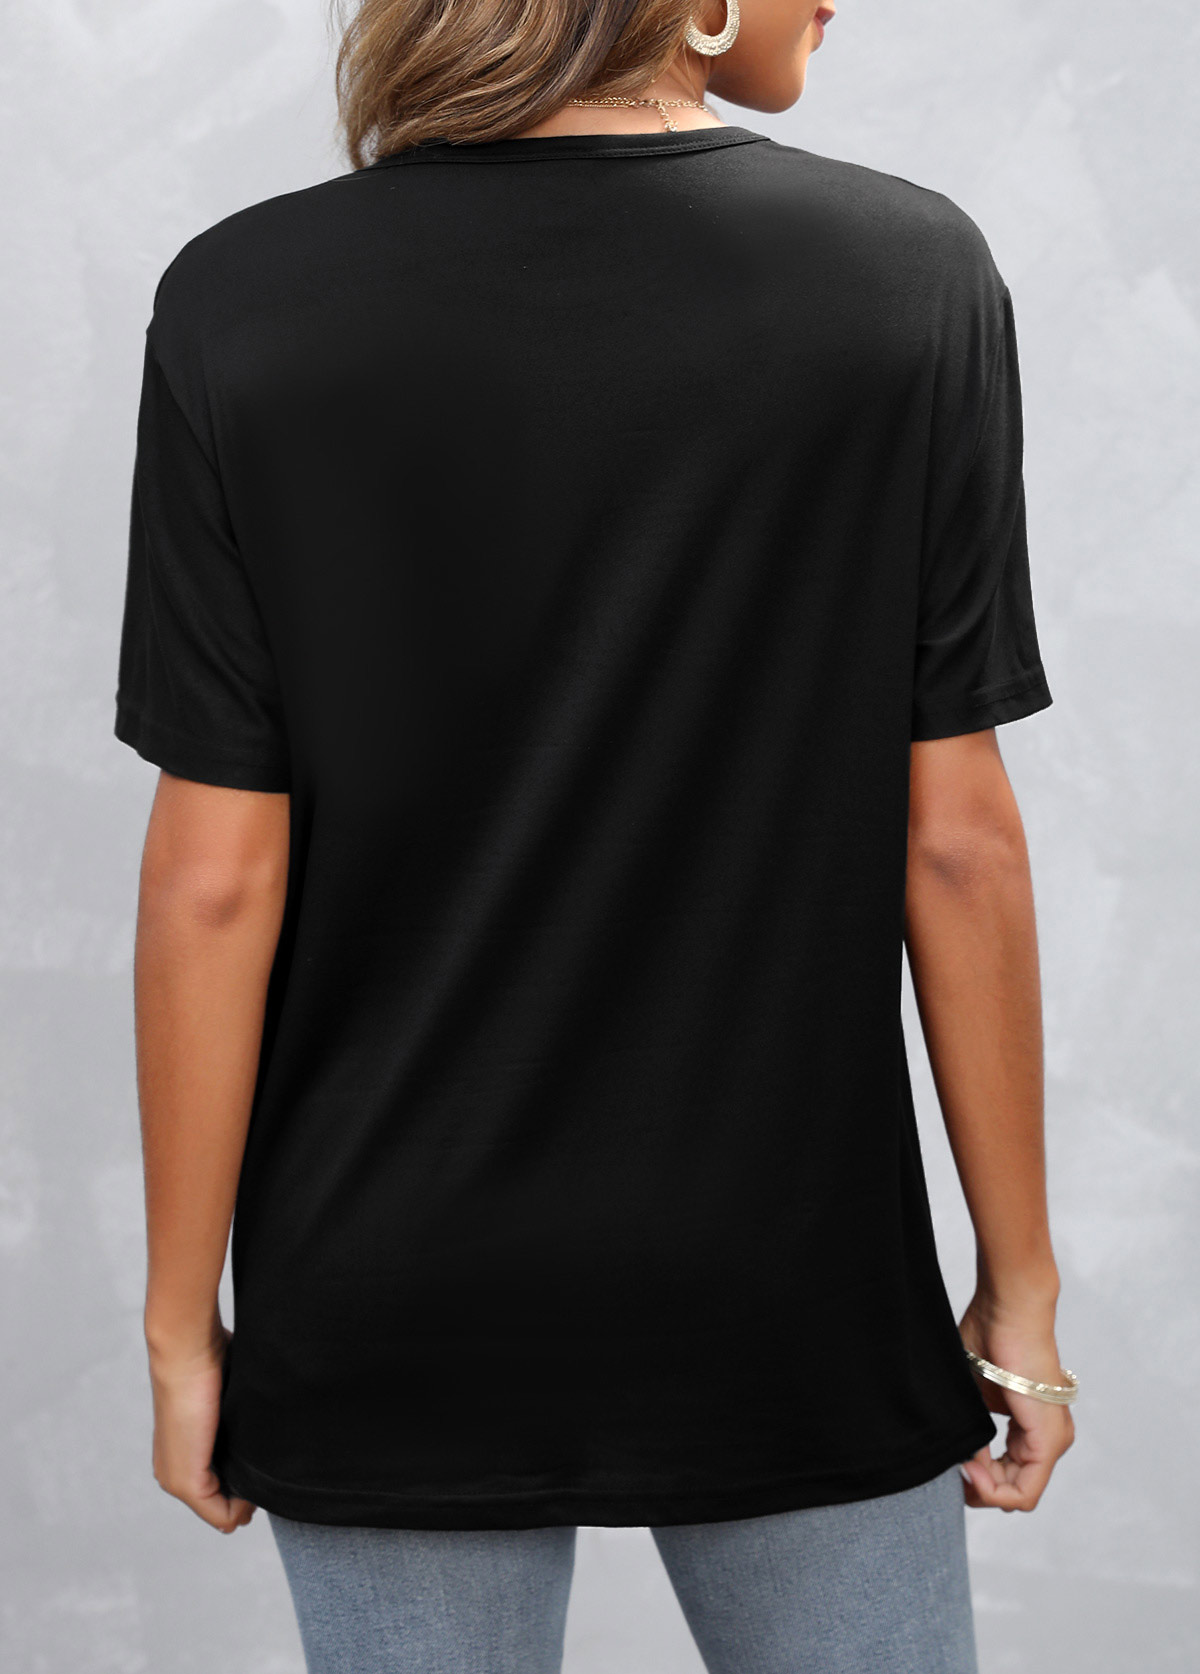 Hot Drilling Short Sleeve Black T Shirt